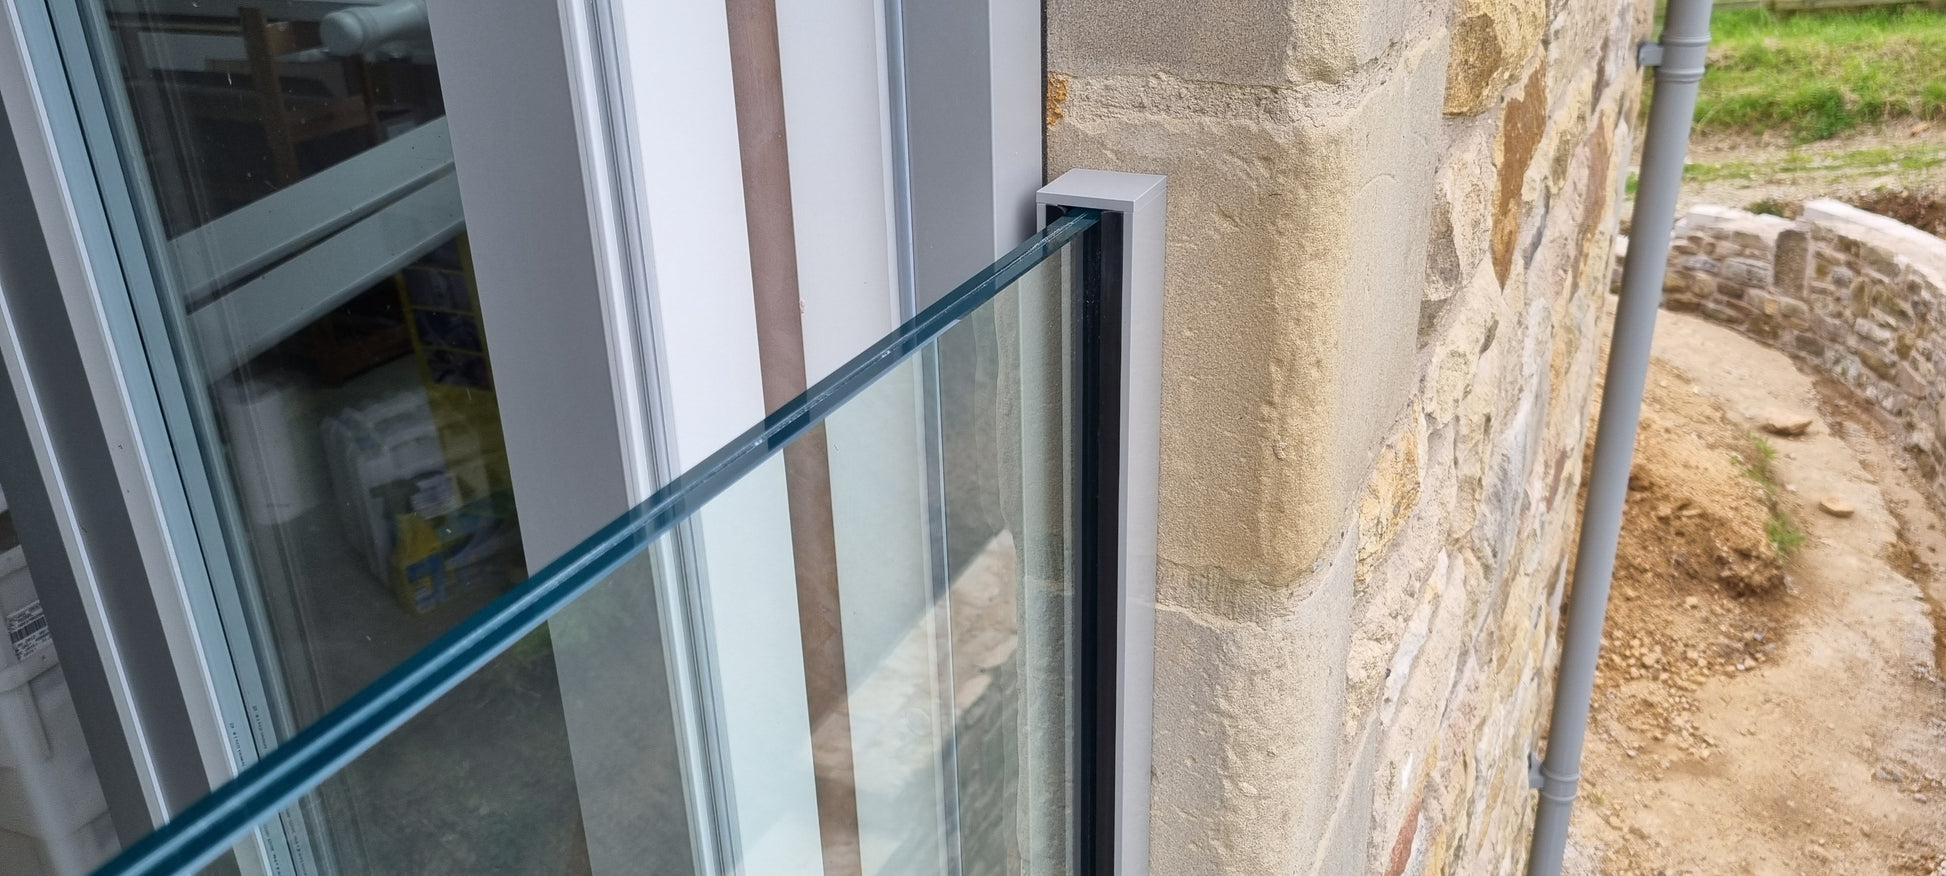 Balmero Juliet Balcony System - glass included - Balustrade Components UK Ltd